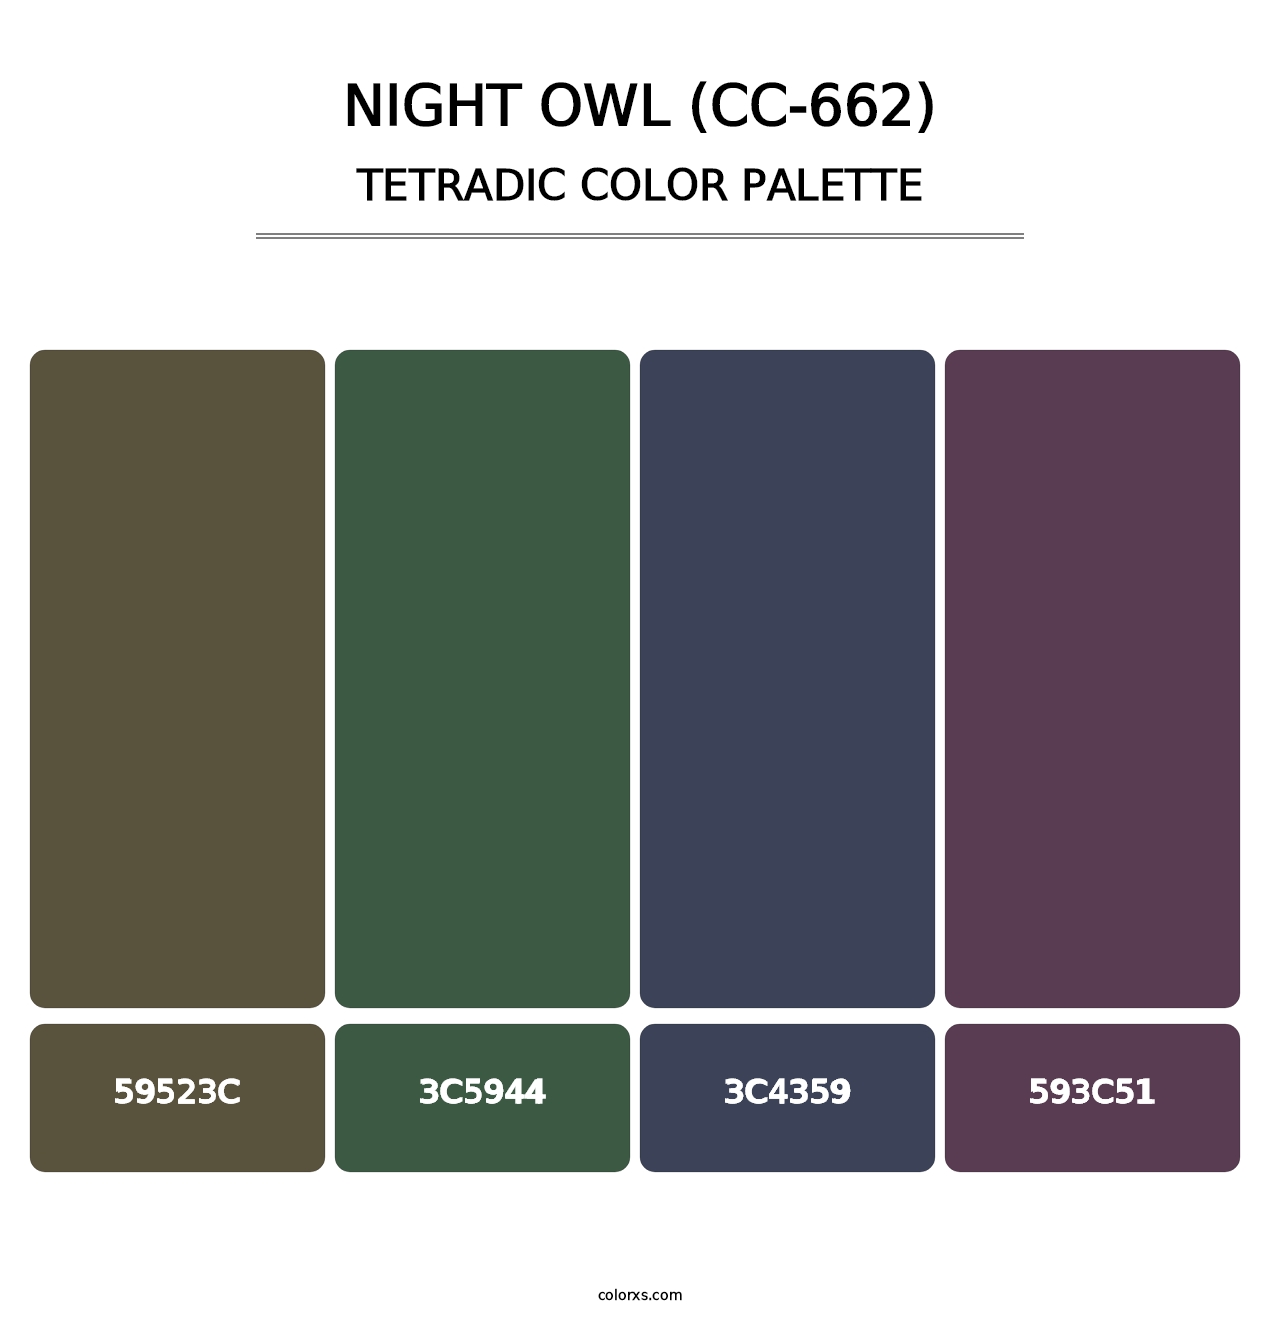 Night Owl (CC-662) - Tetradic Color Palette